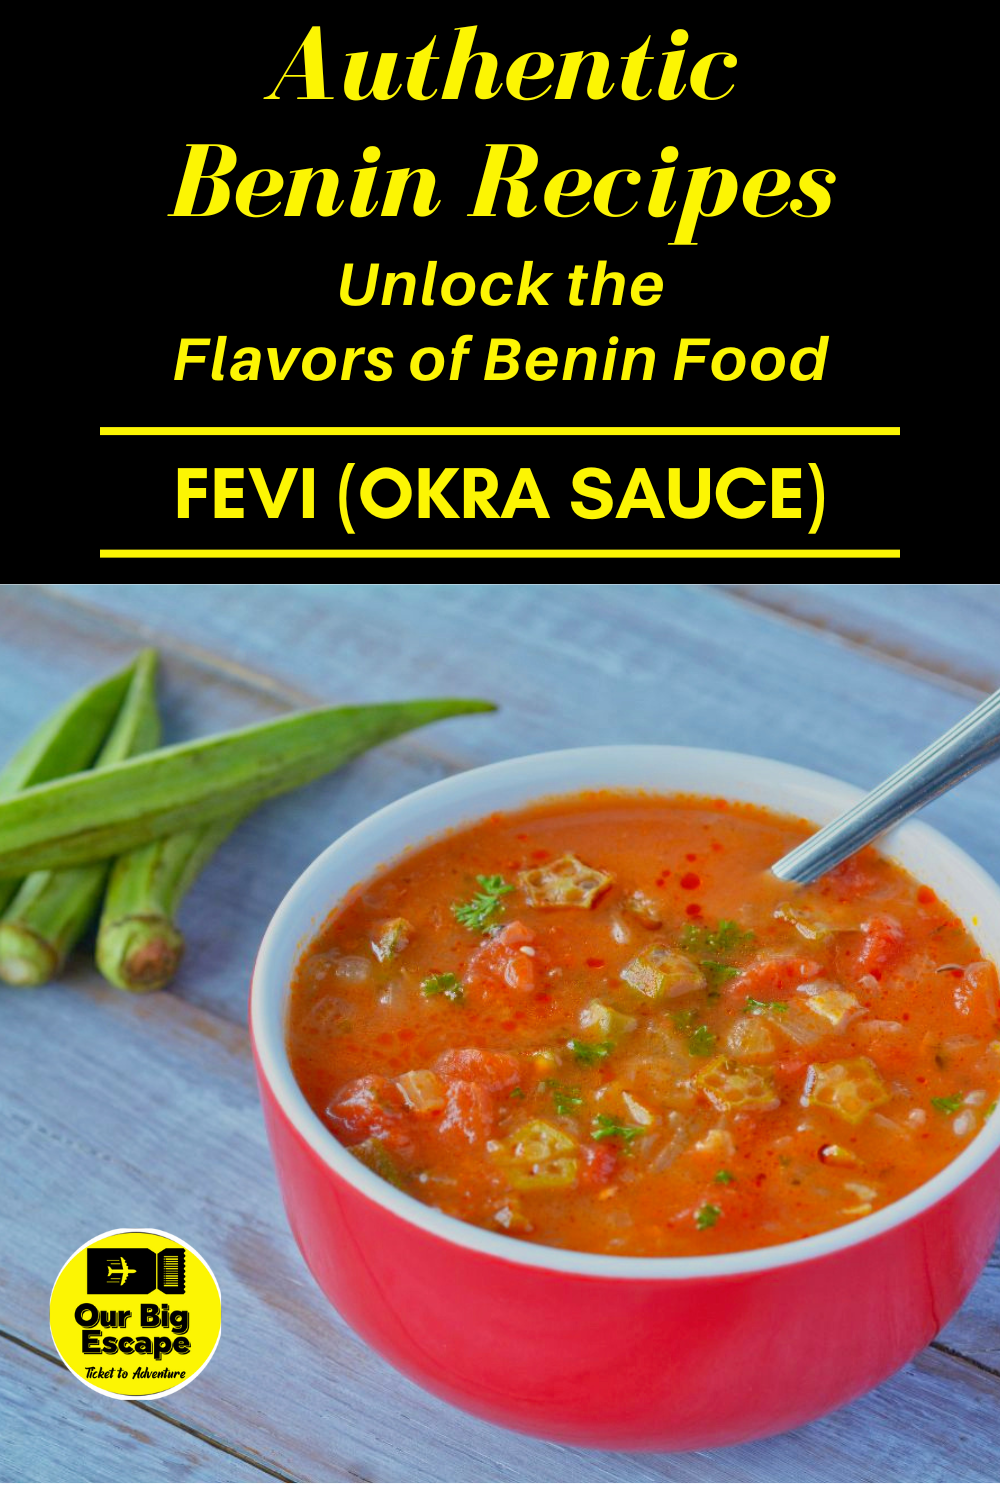 Fevi (Okra Sauce) - 22 Authentic Benin Recipes - Unlock the Flavors of Benin Food